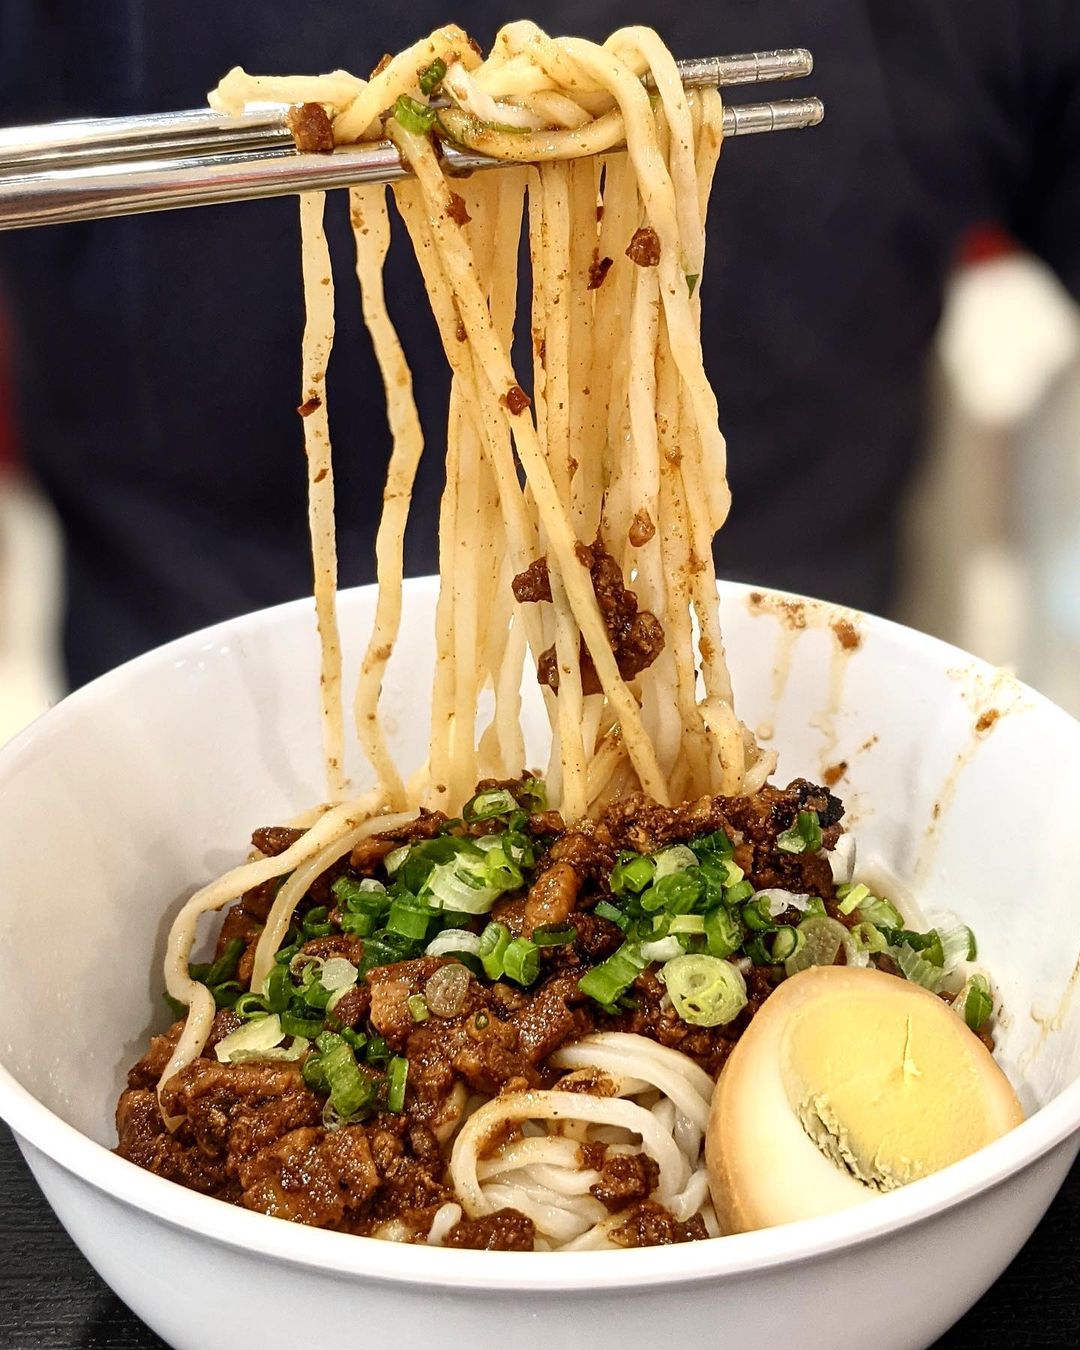 Hei Lun Shi Tang - Braised Pork noodles